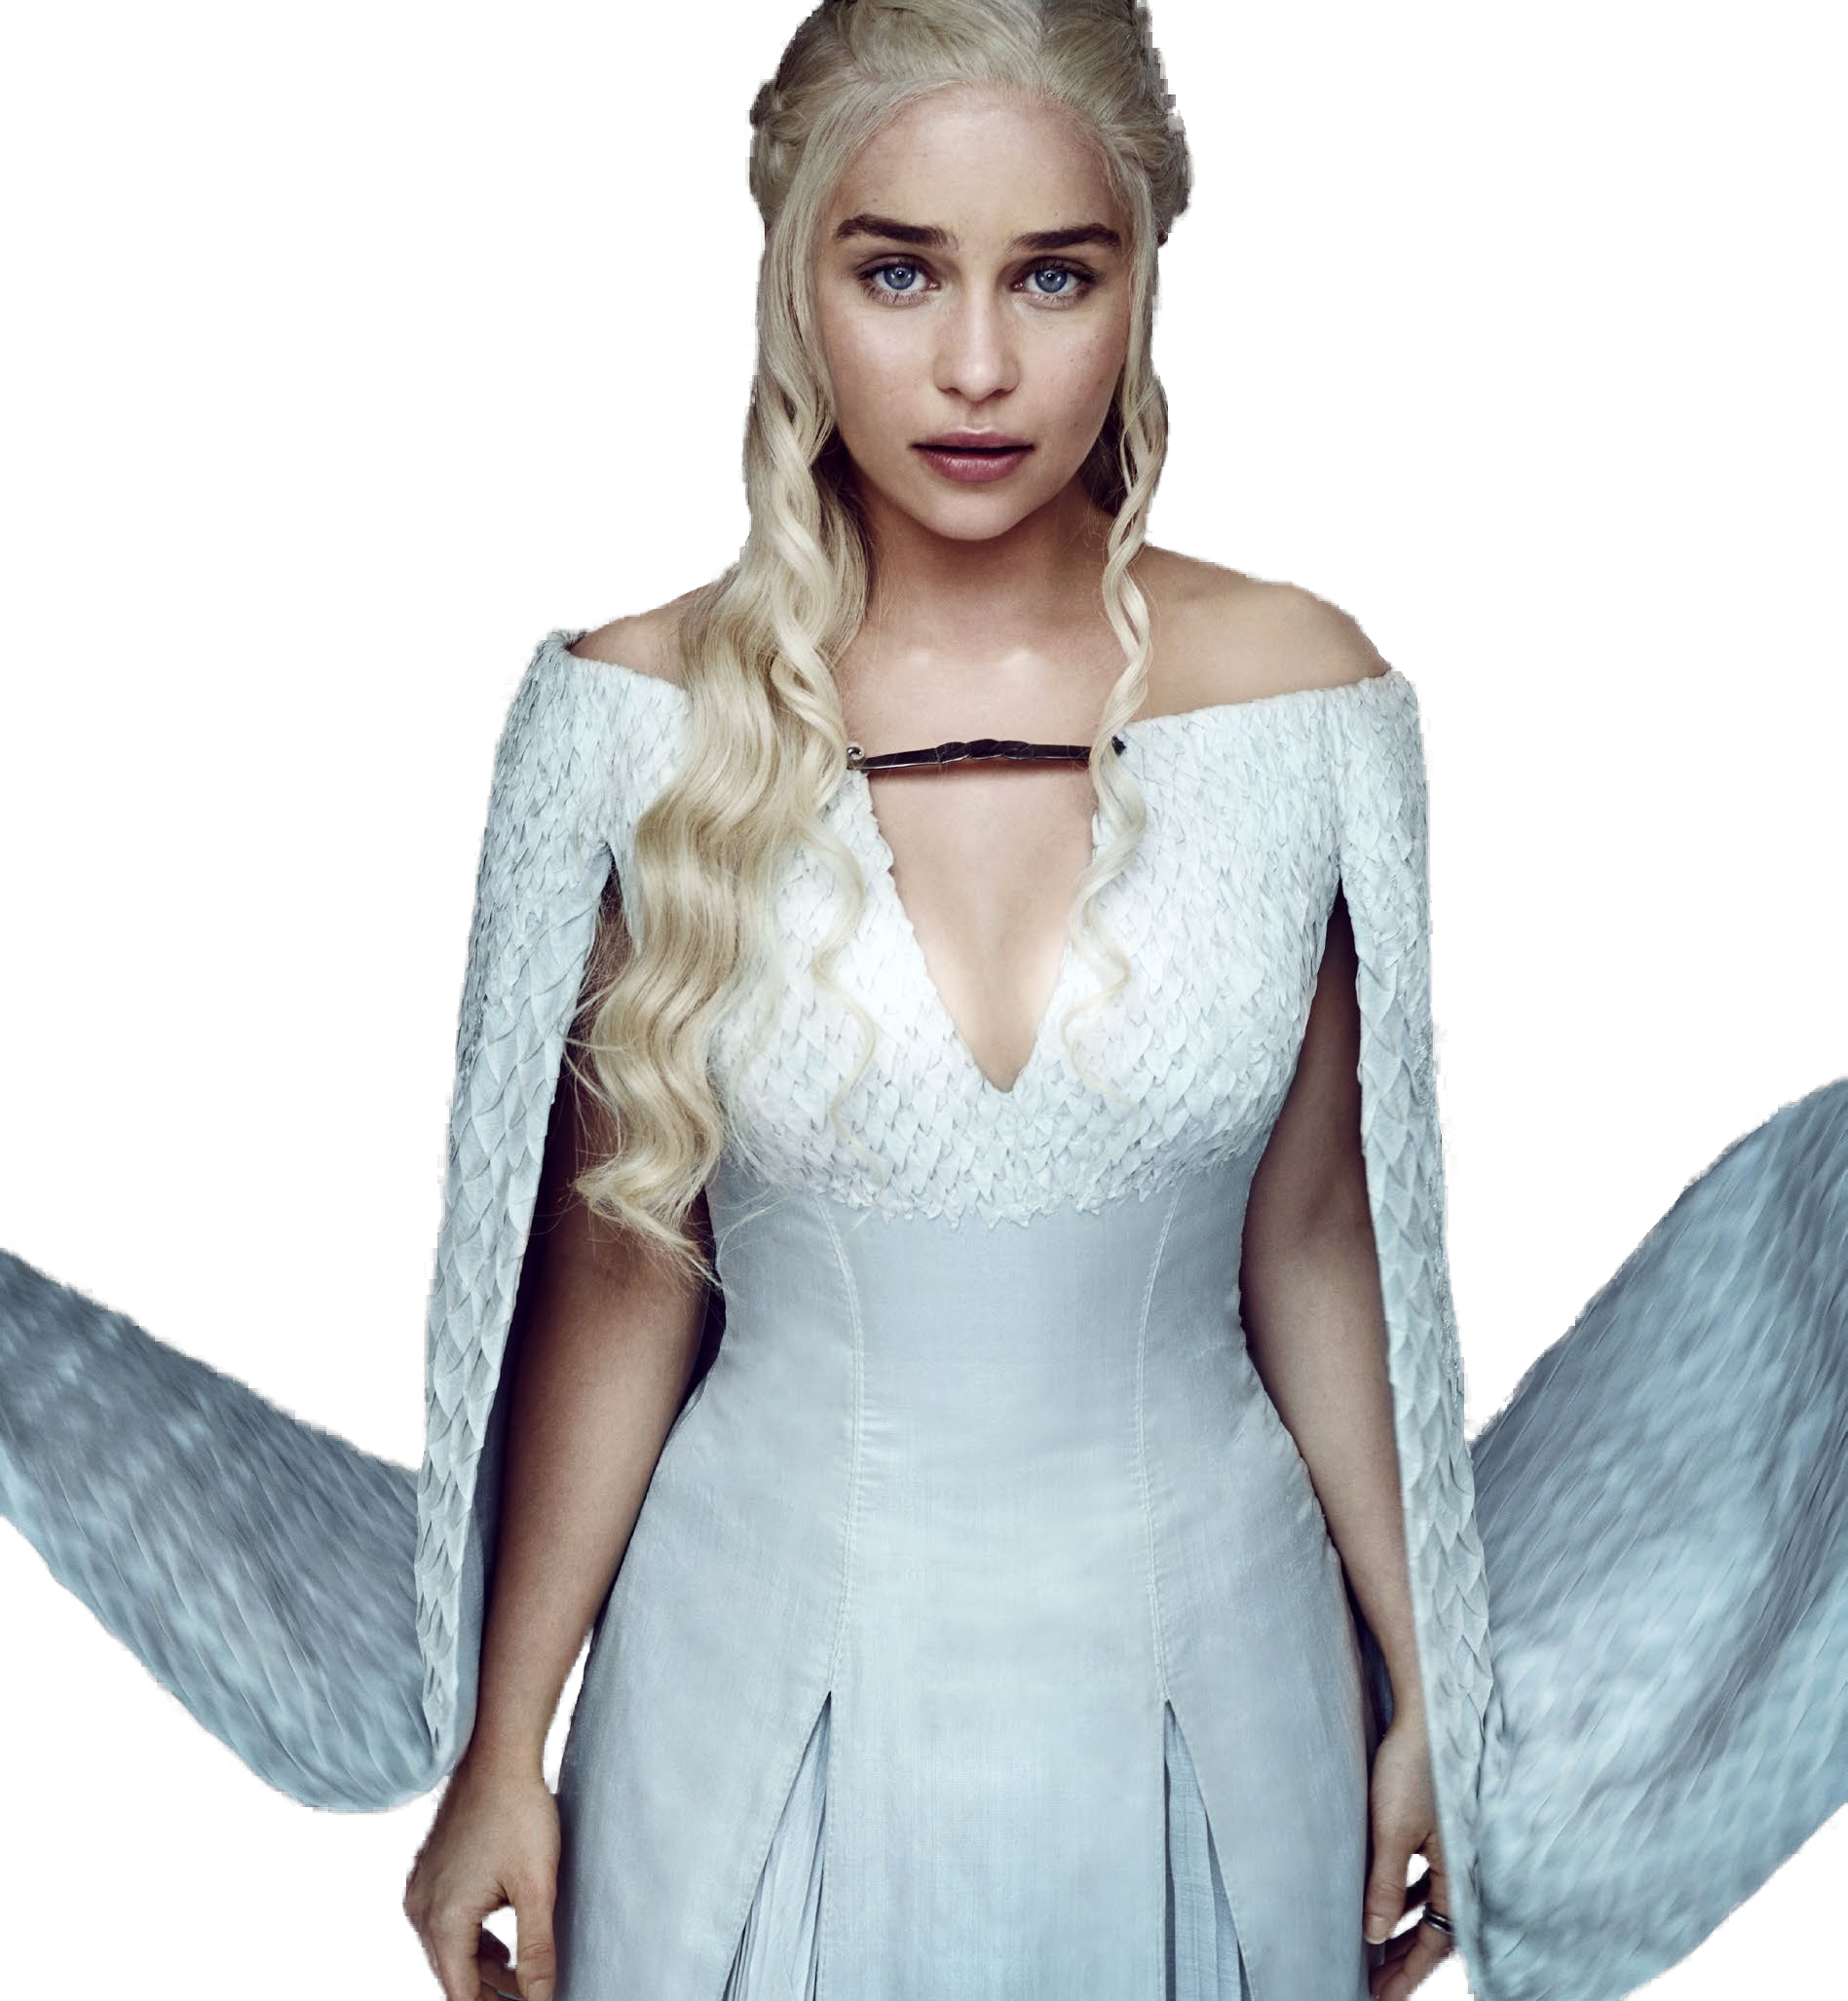 Daenerys Targaryen PNG Photo